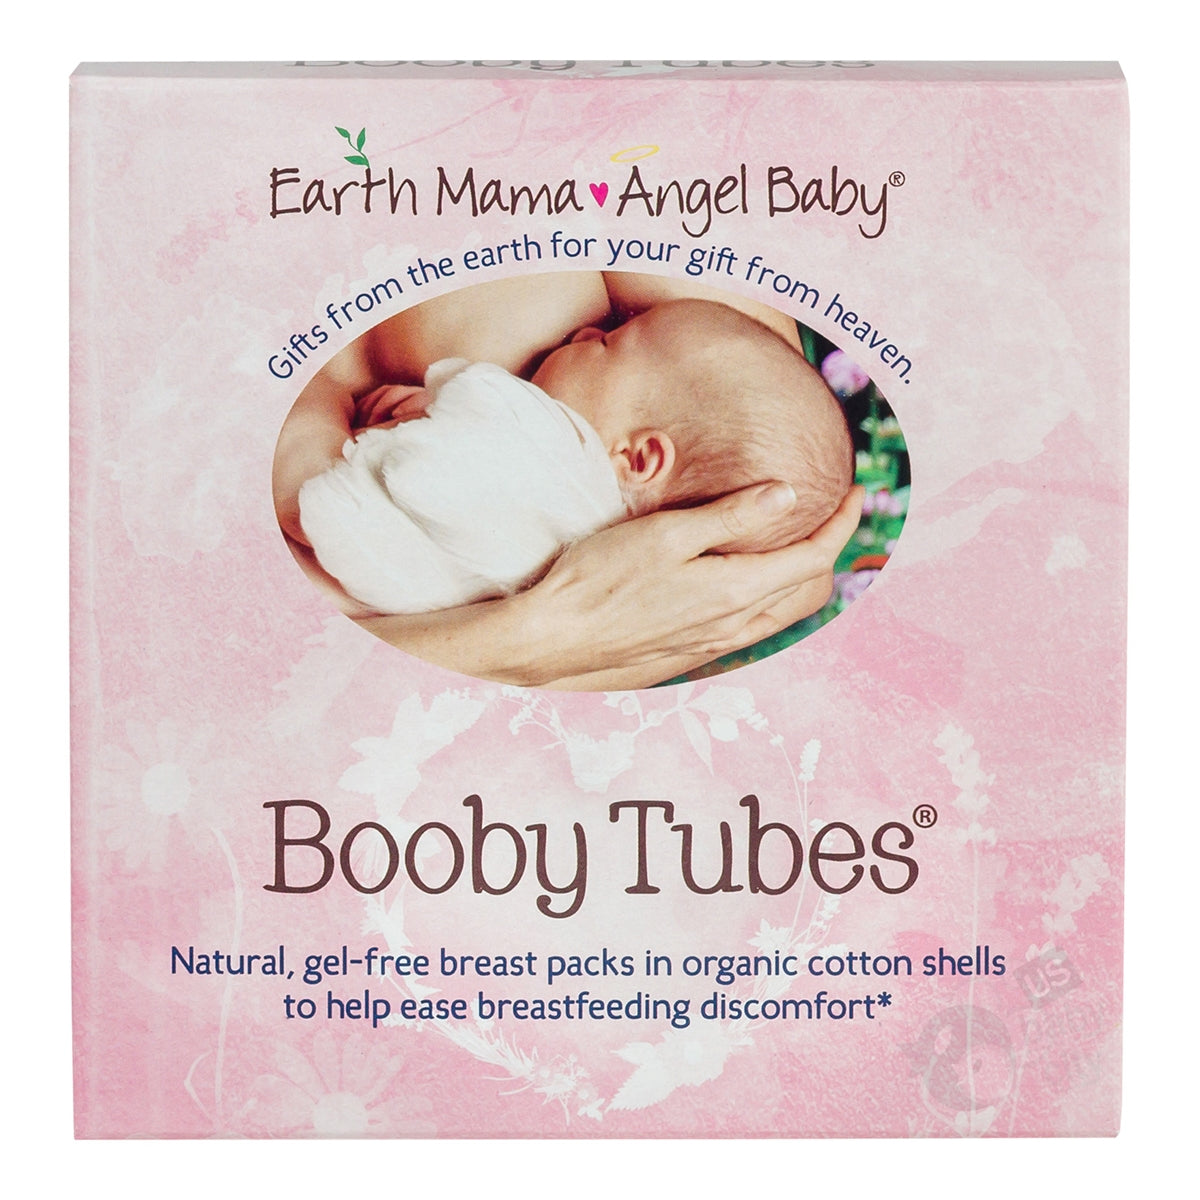 Booby Tubes (Earth Mama Angel Baby)